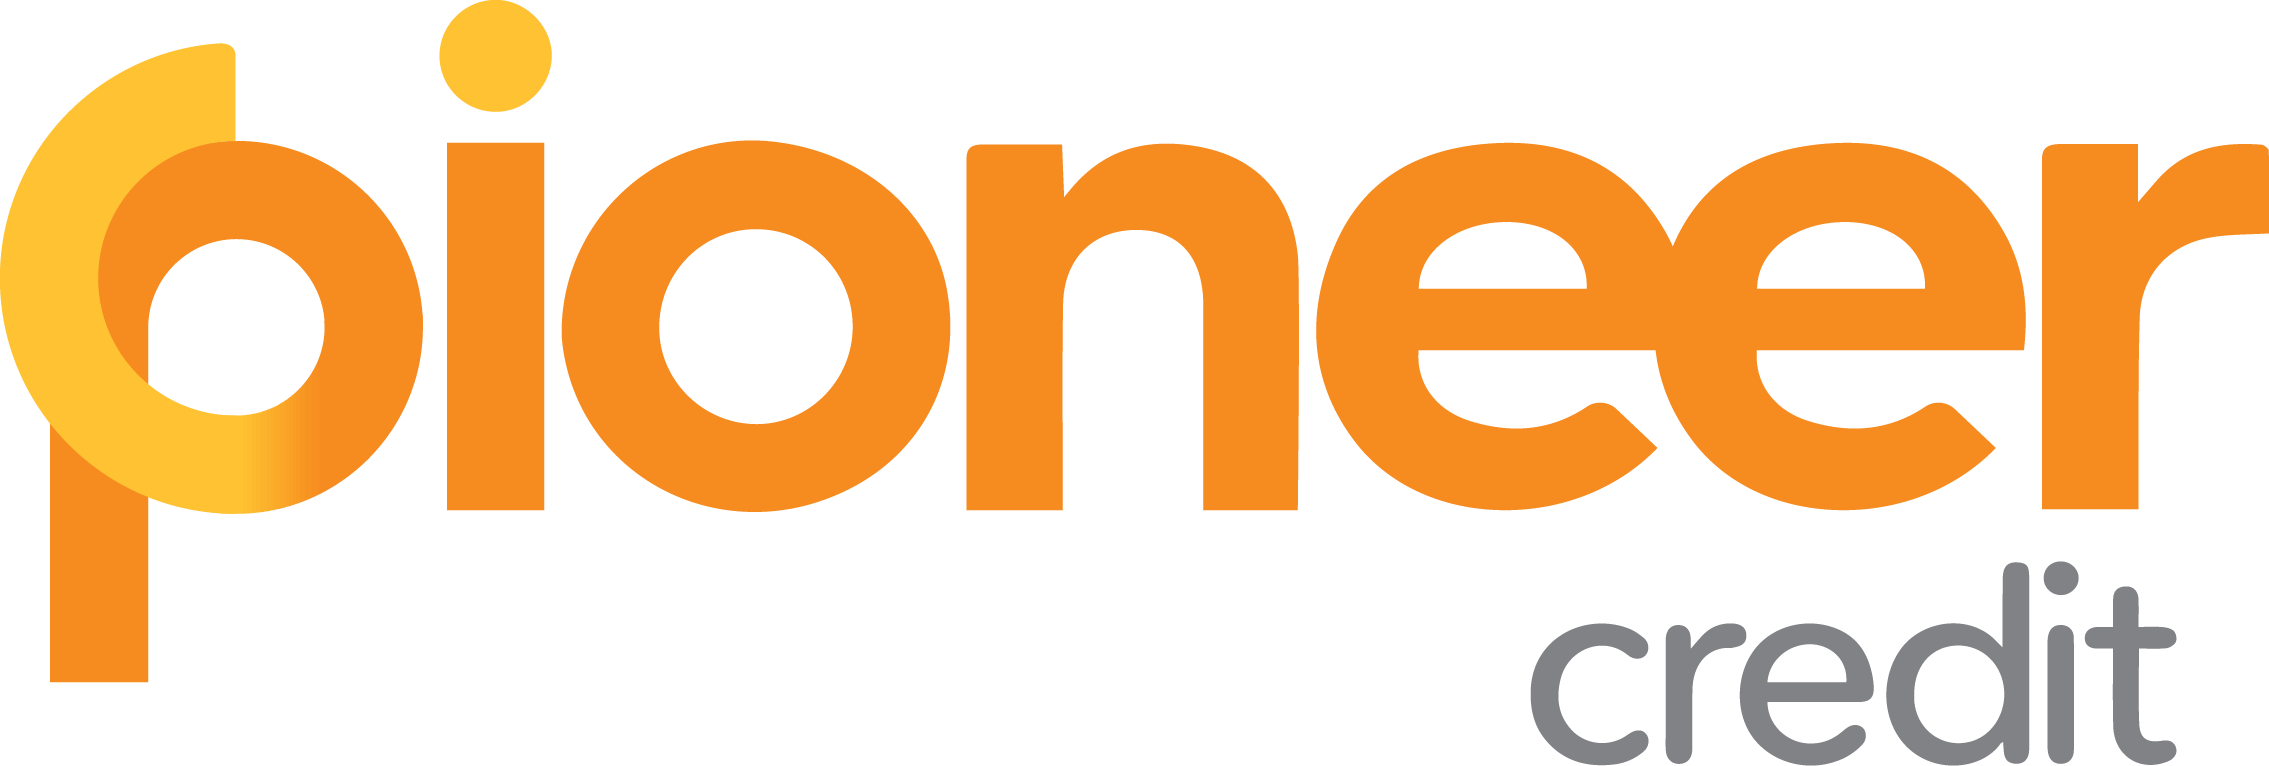 Pioneer Credit Limited Logo